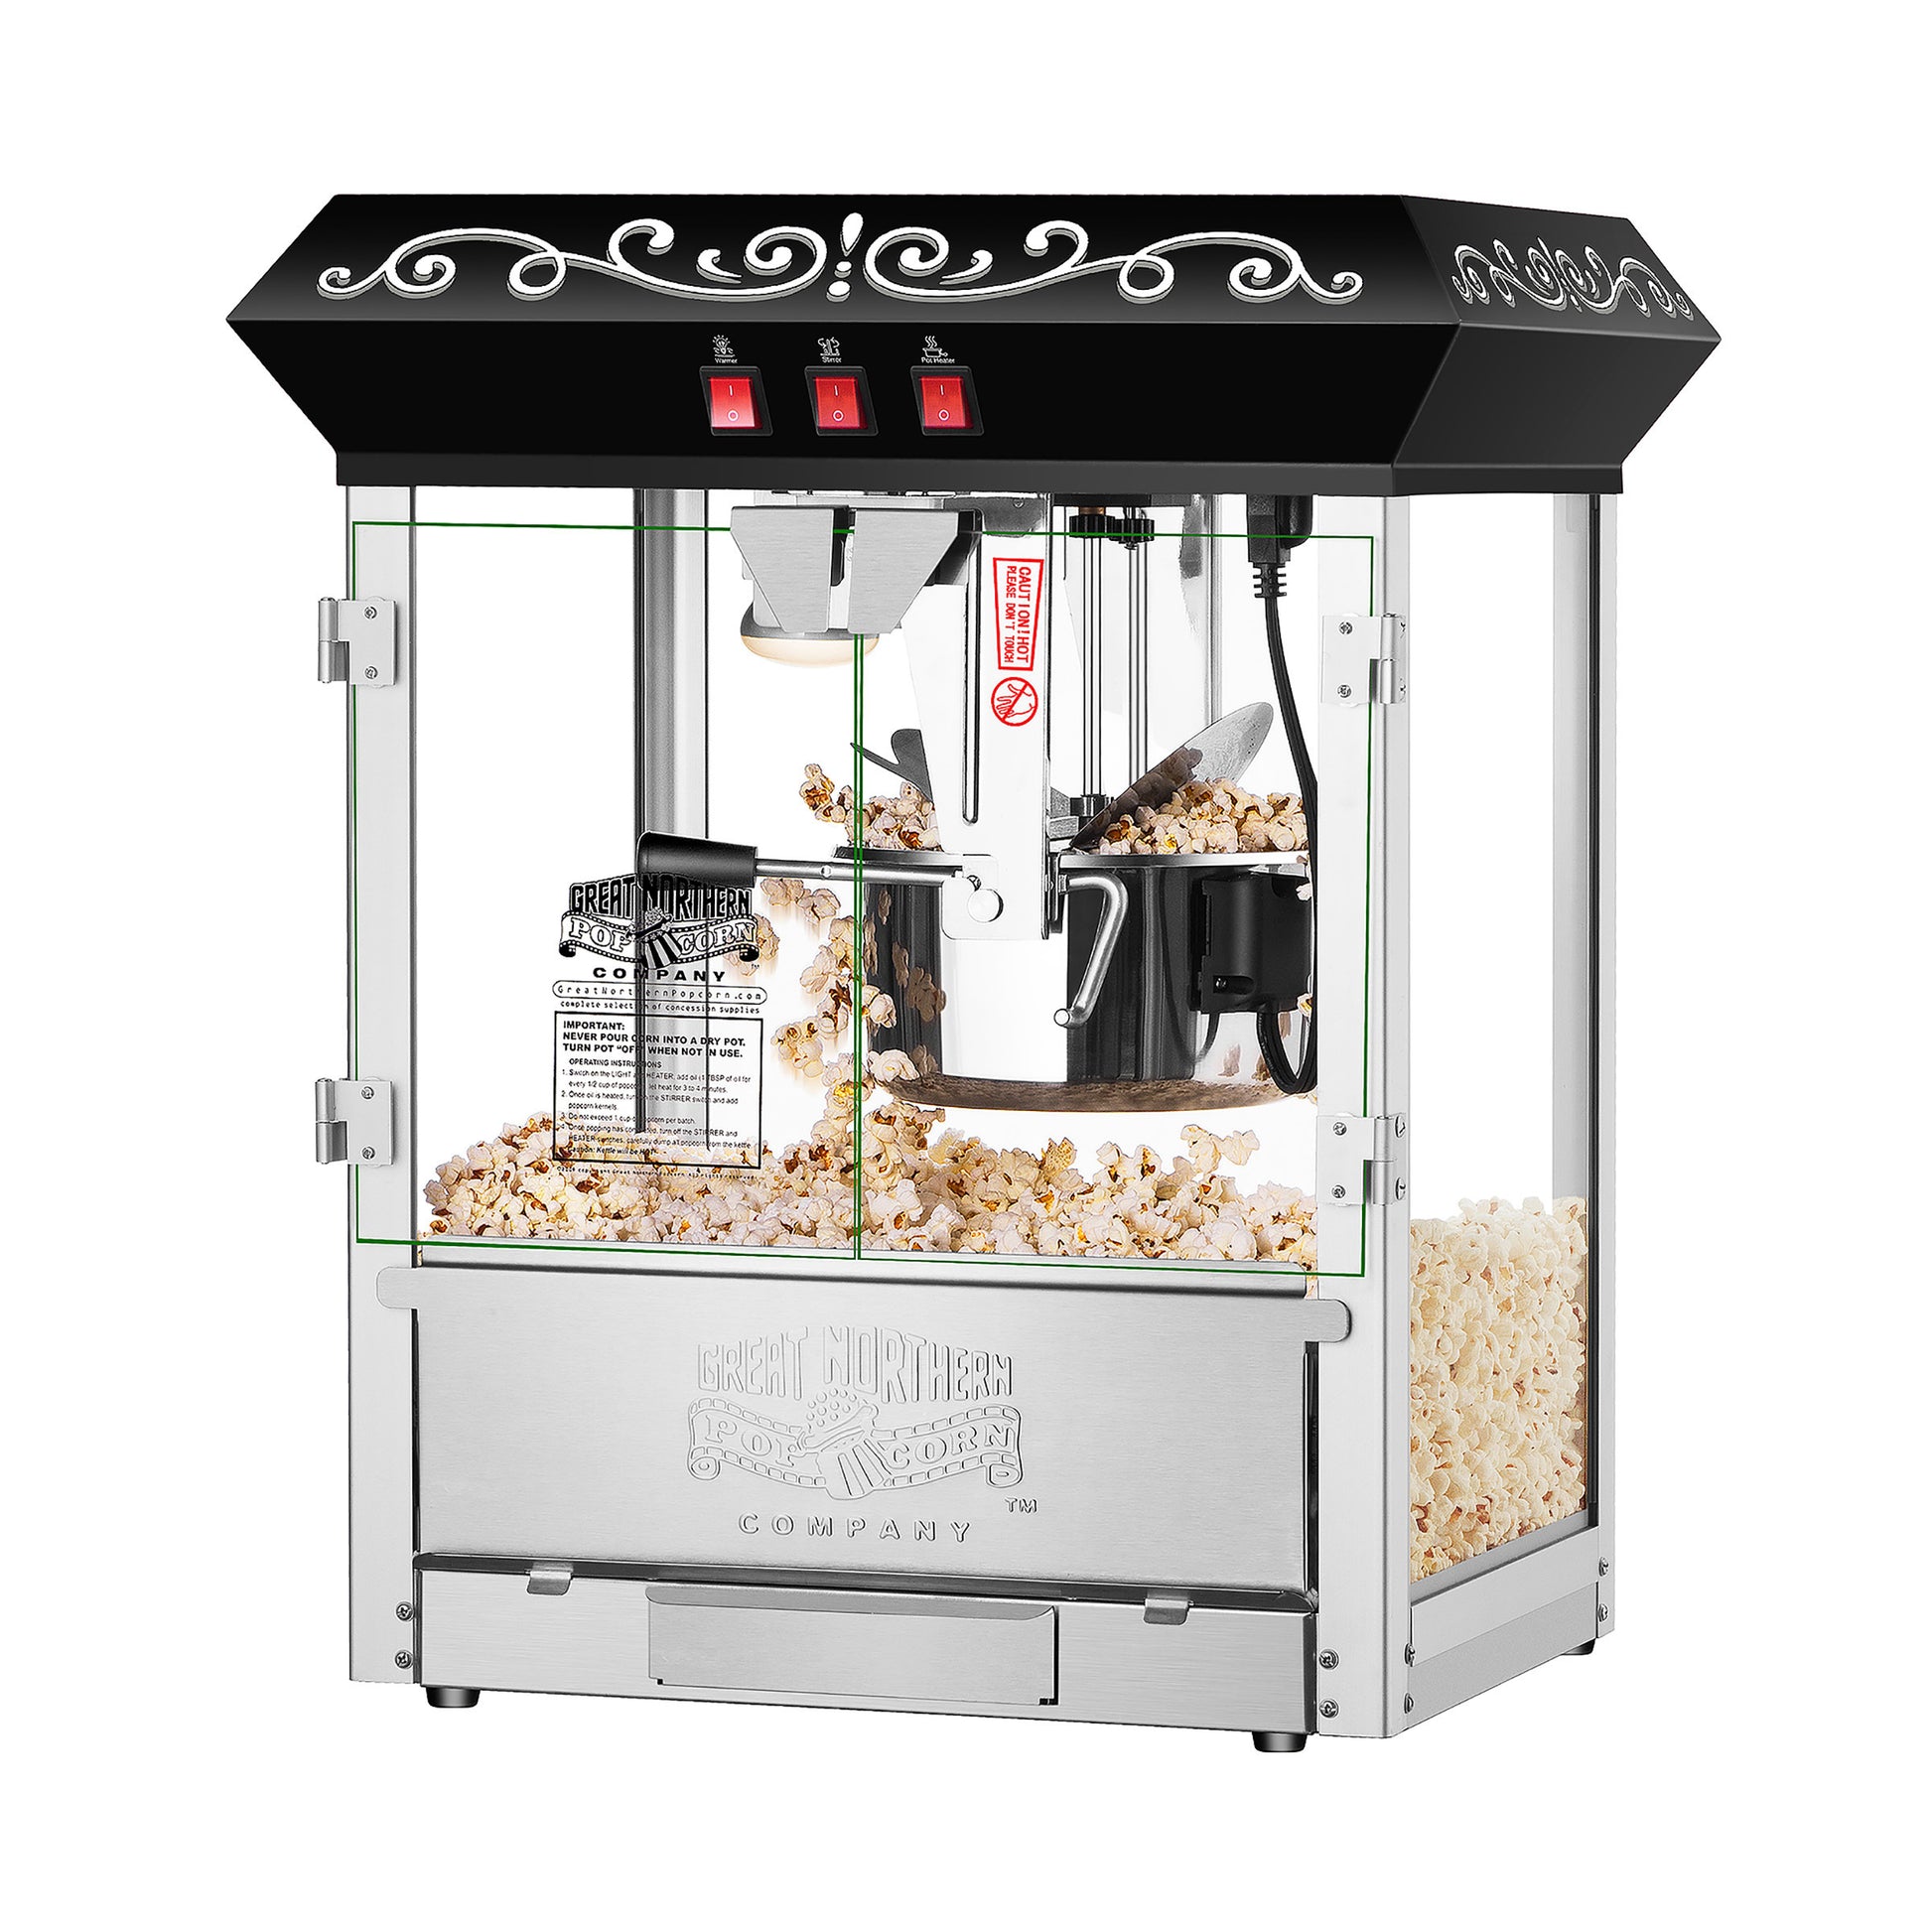 Popcorn Machines, Popcorn Poppers